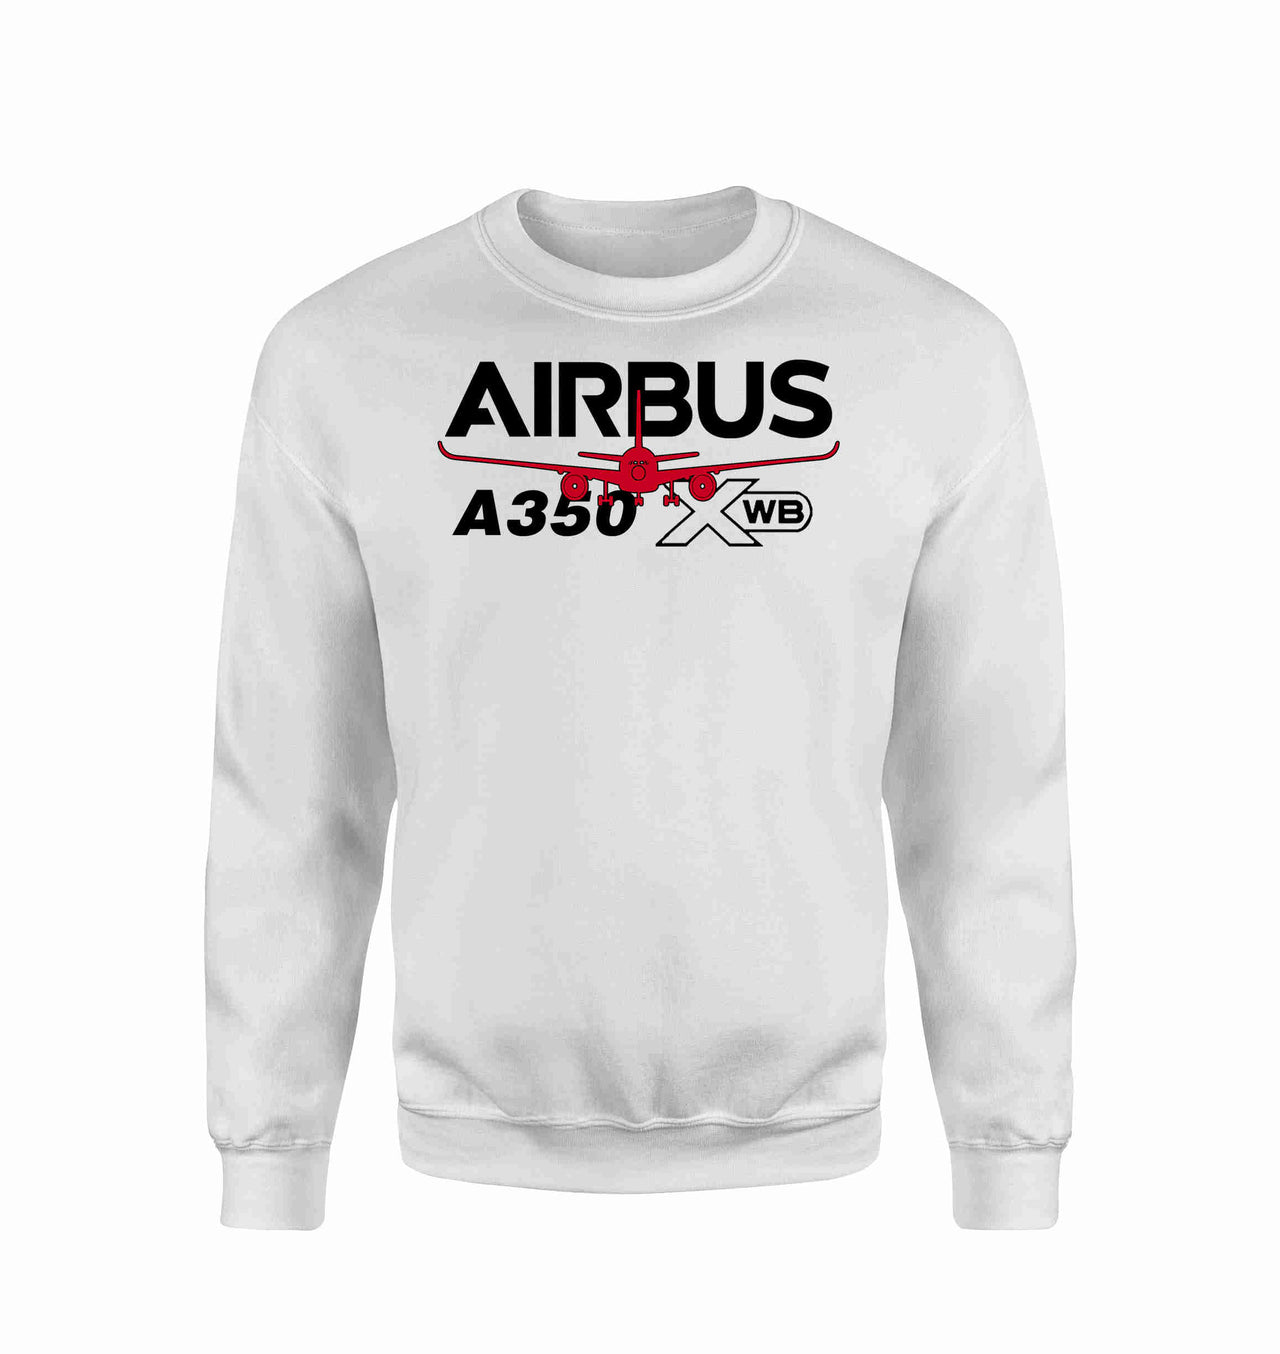 Amazing Airbus A350 XWB Designed Sweatshirts